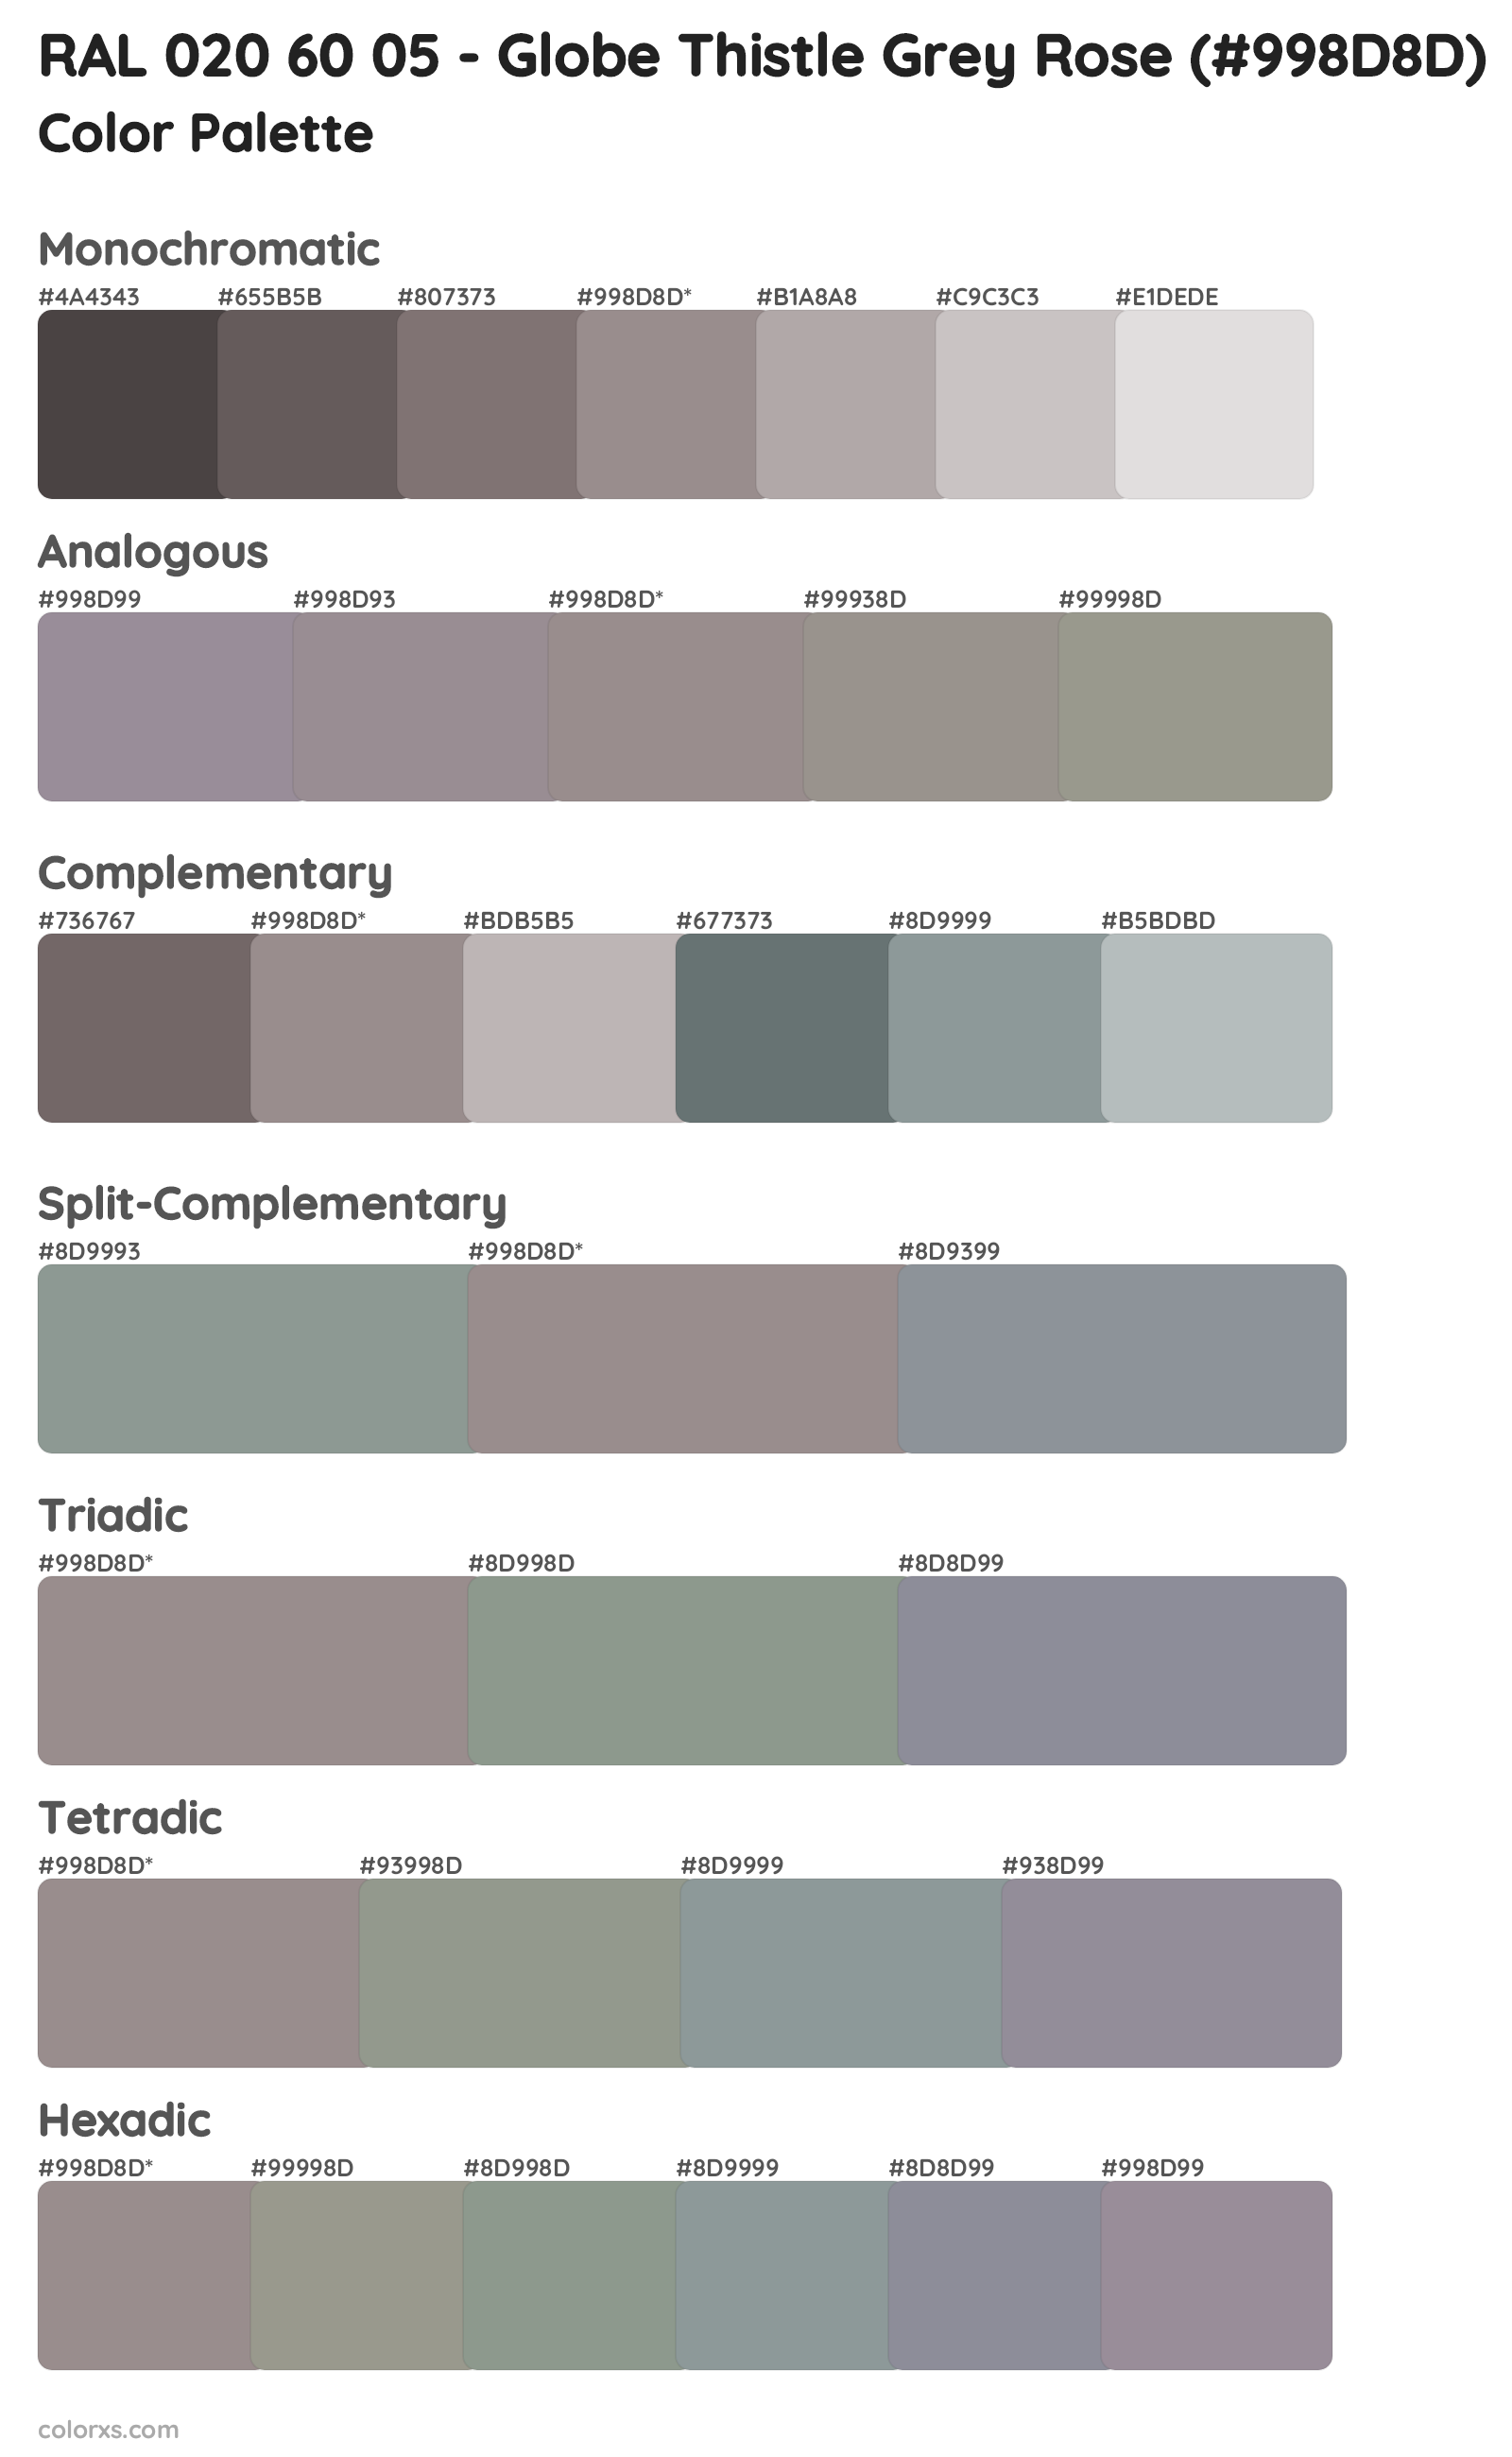 RAL 020 60 05 - Globe Thistle Grey Rose Color Scheme Palettes